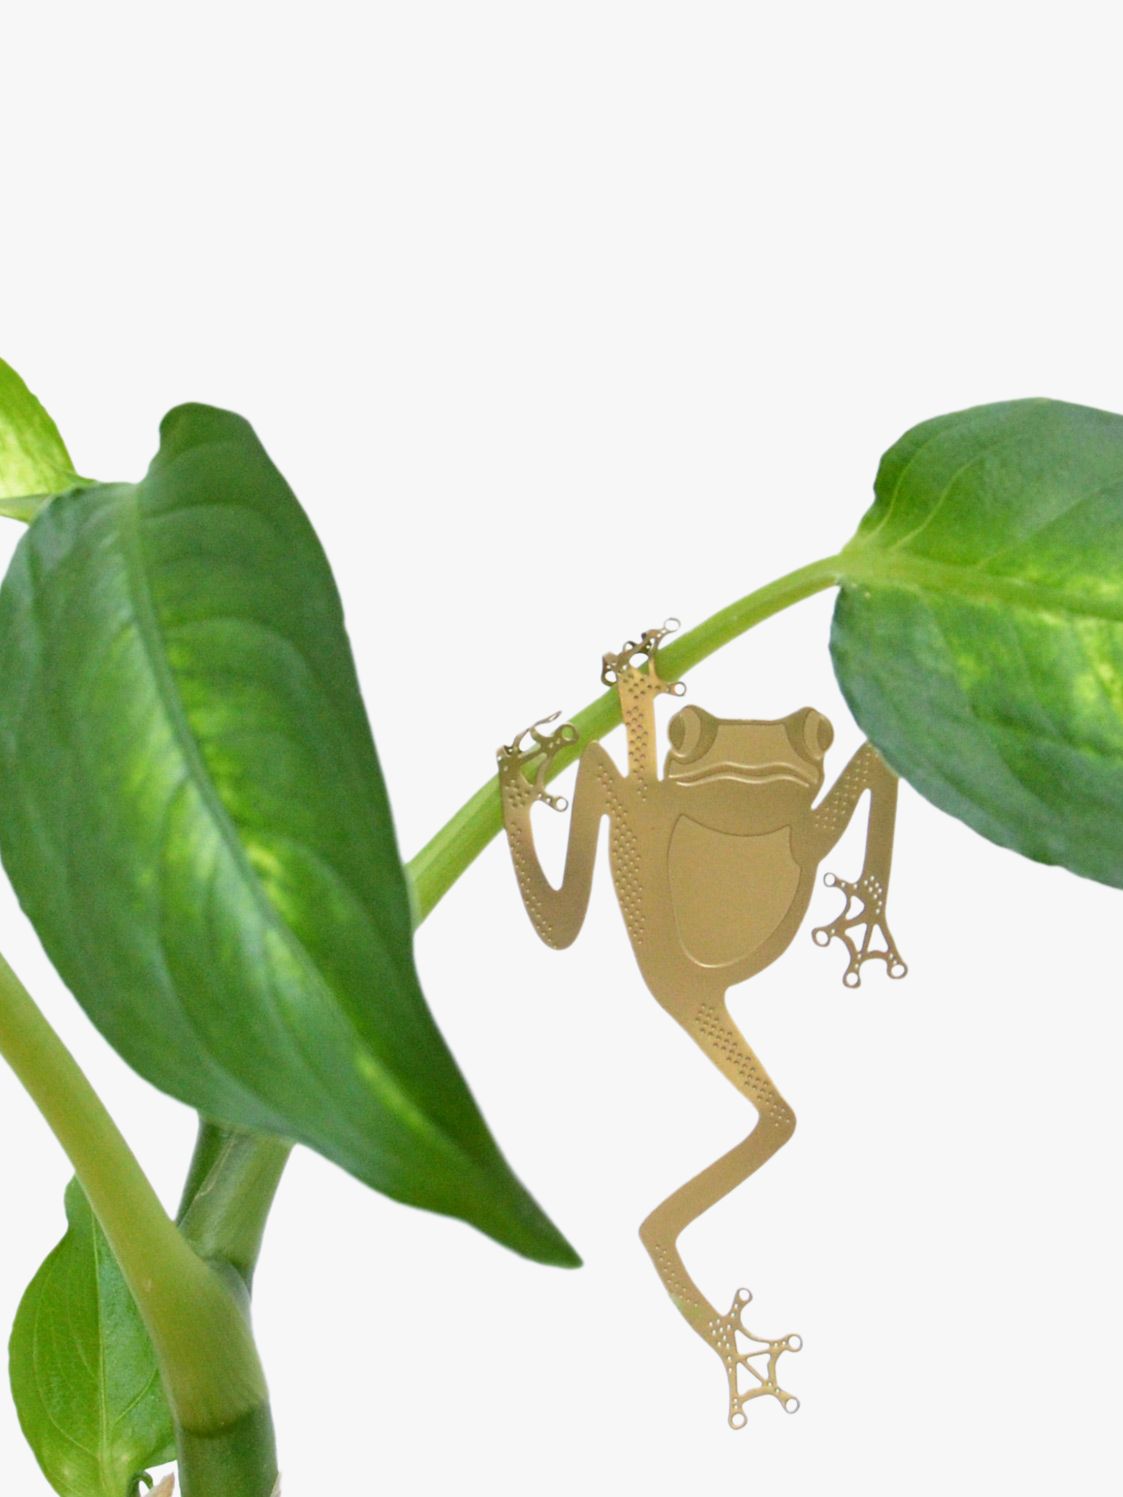 Another Studio Frog Decorative Plant Animal